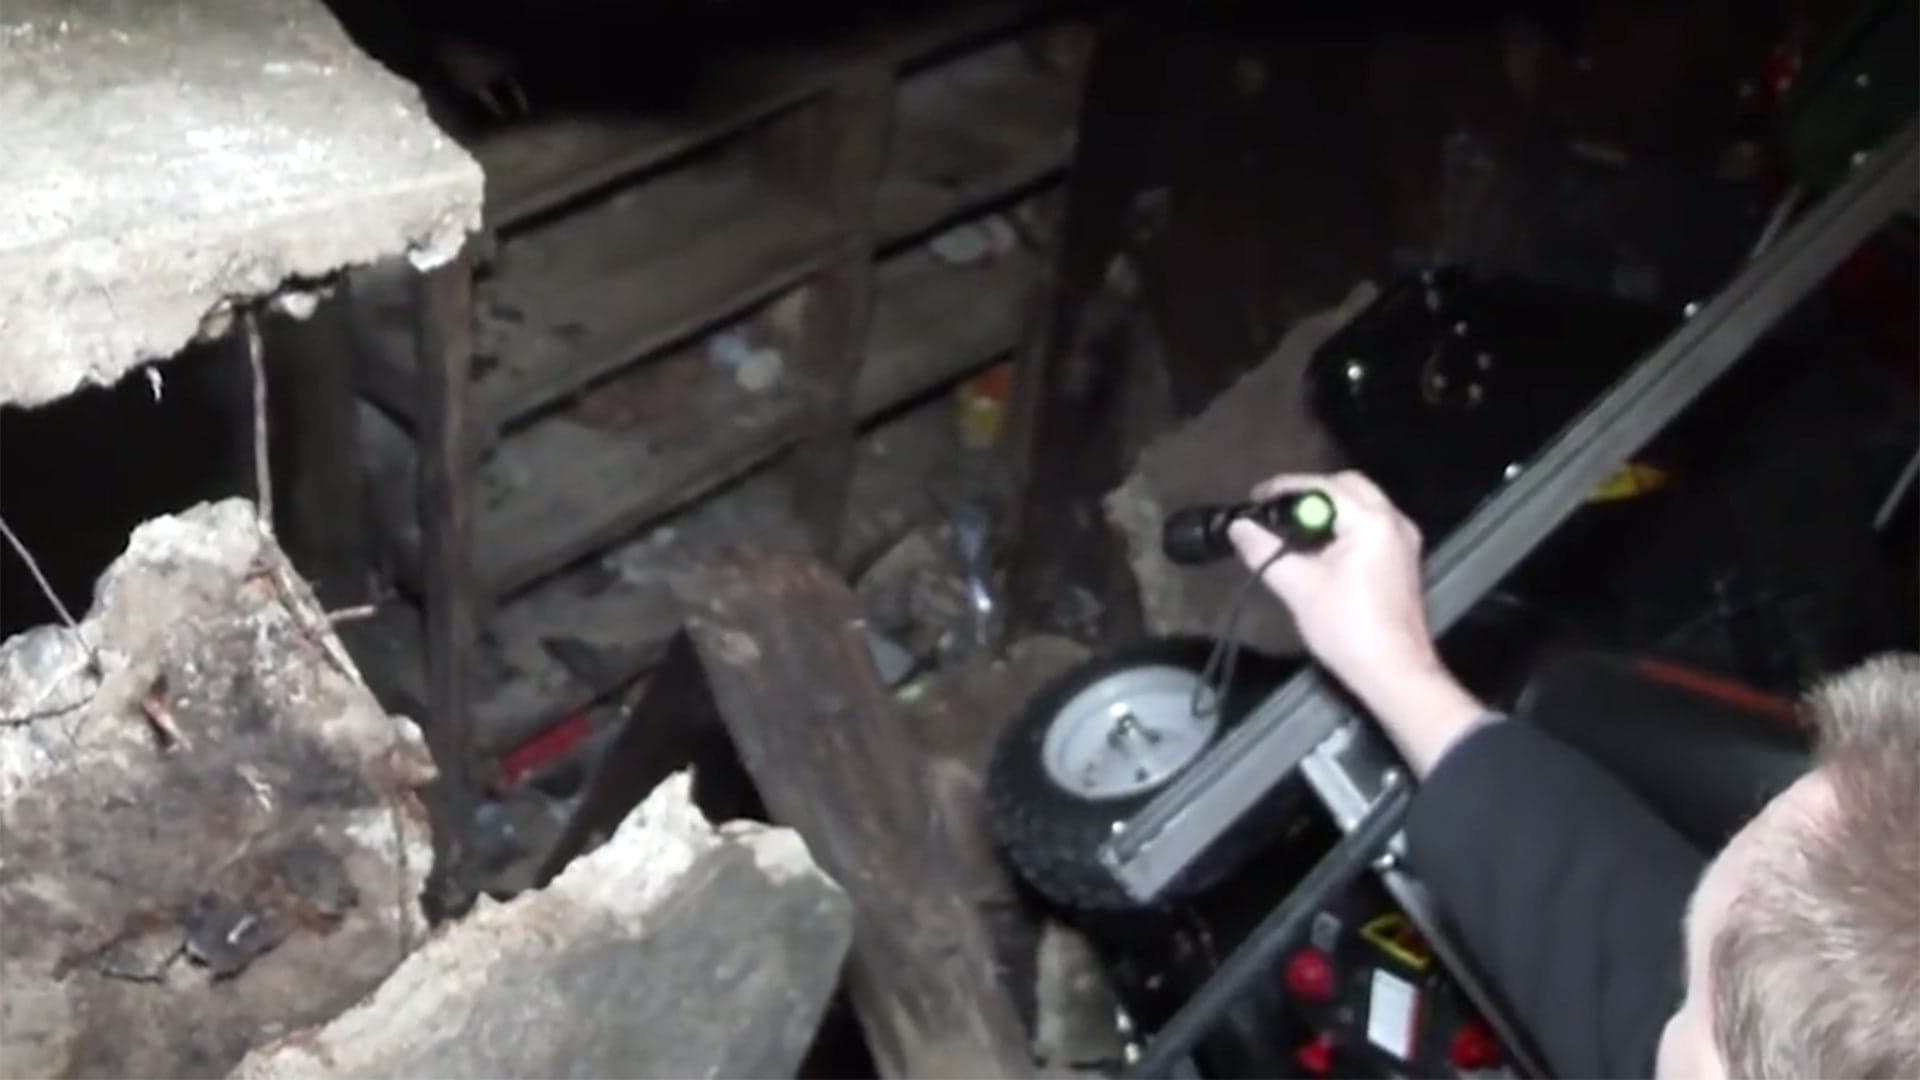 Sinkhole Reveals Creepy, Secret Old Room Underneath Suburban Family’s Garage